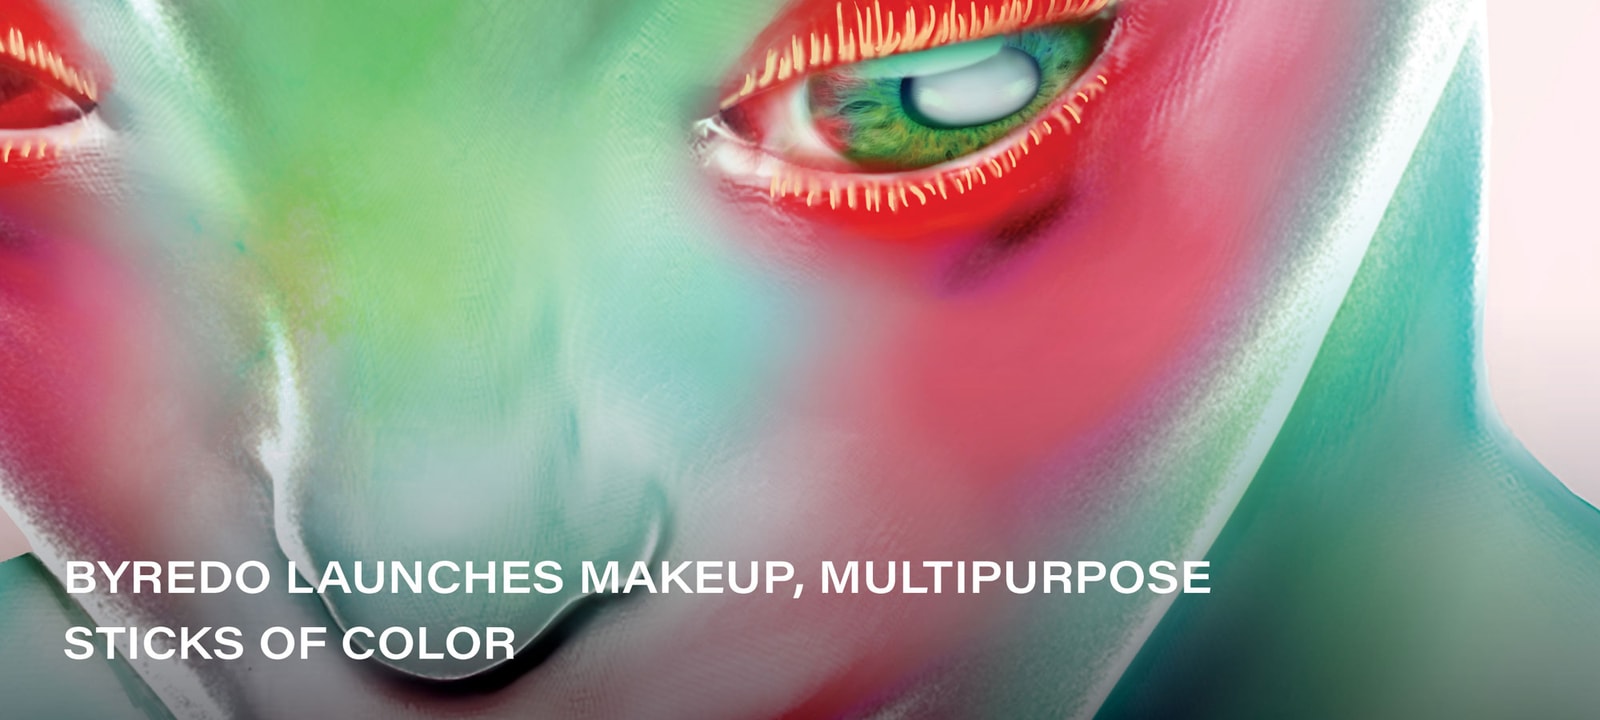 Byredo Makeup Campaign